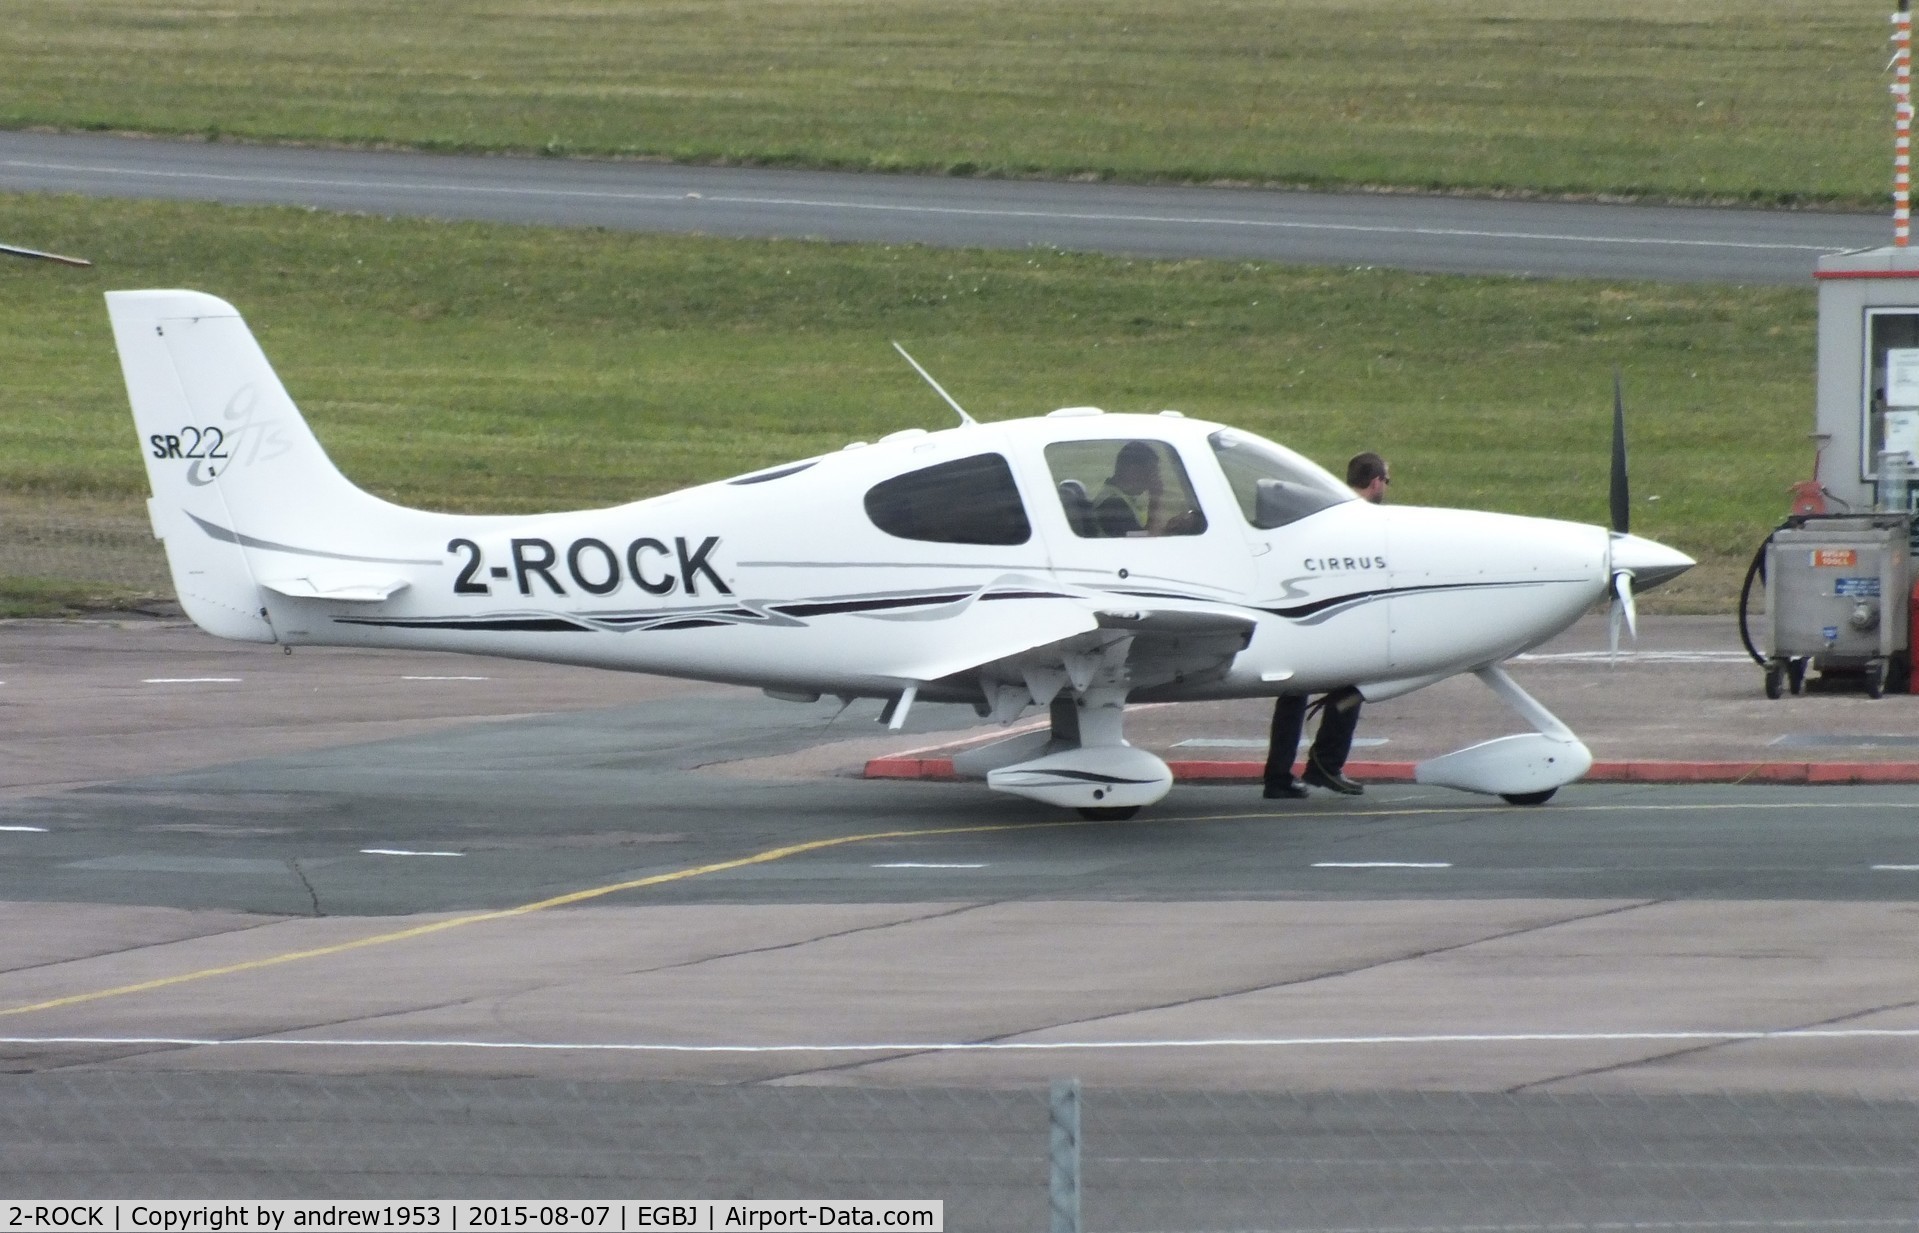 2-ROCK, 2005 Cirrus SR22 GTS C/N 1313, 2-ROCK at Gloucestershire Airport.